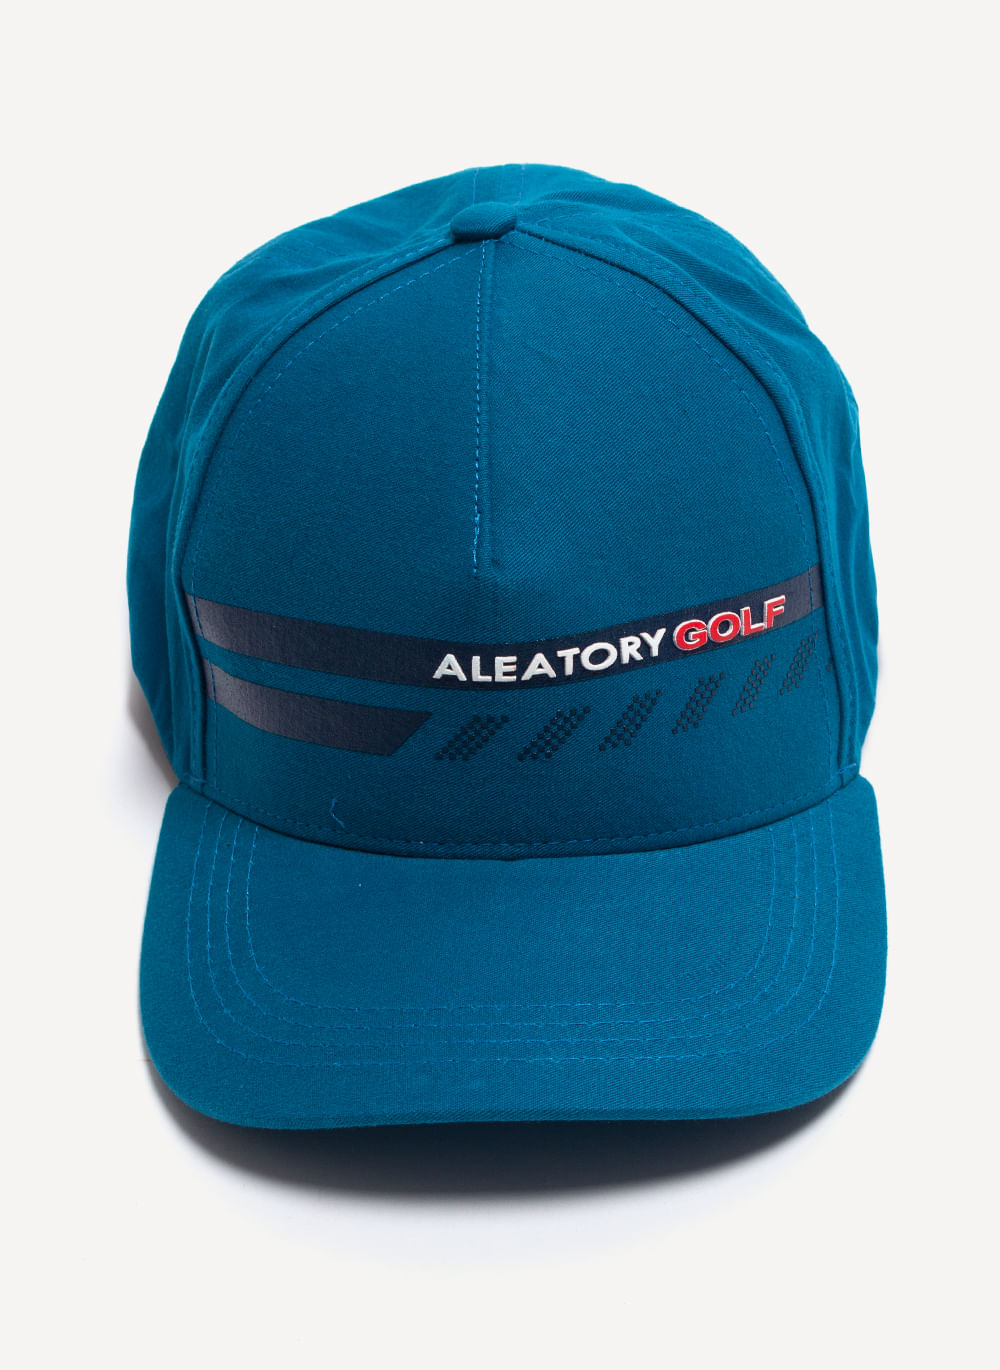 Bone-Aleatory-Golf-Azul-Azul-Unico